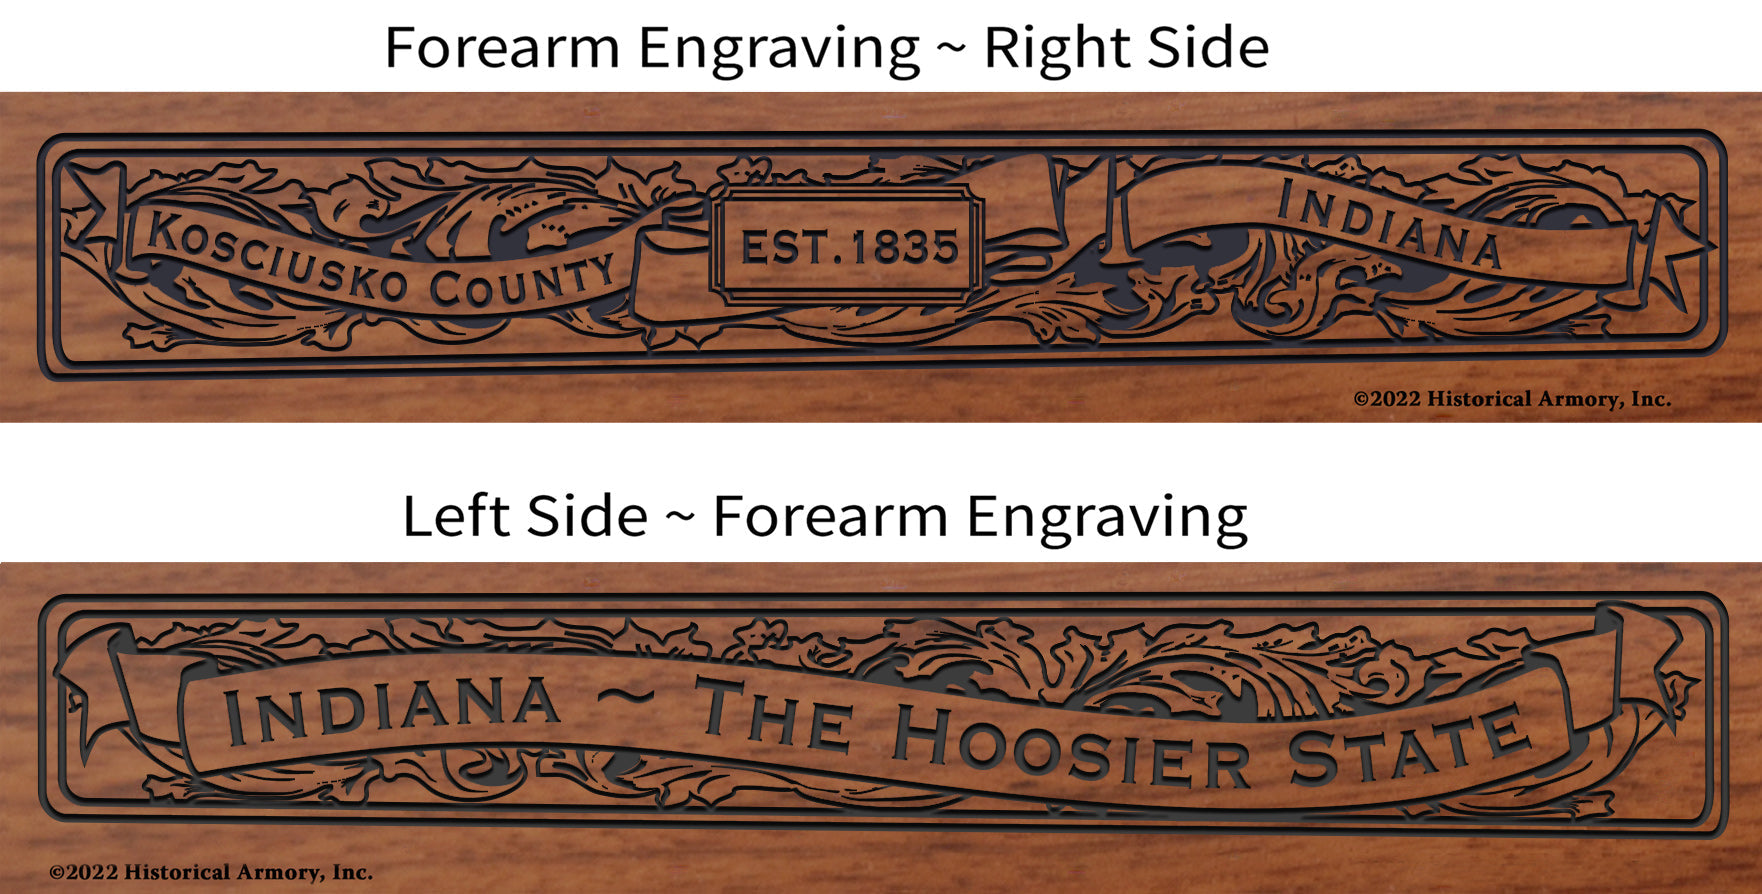 Kosciusko County Indiana Engraved Rifle Forearm Right-Side